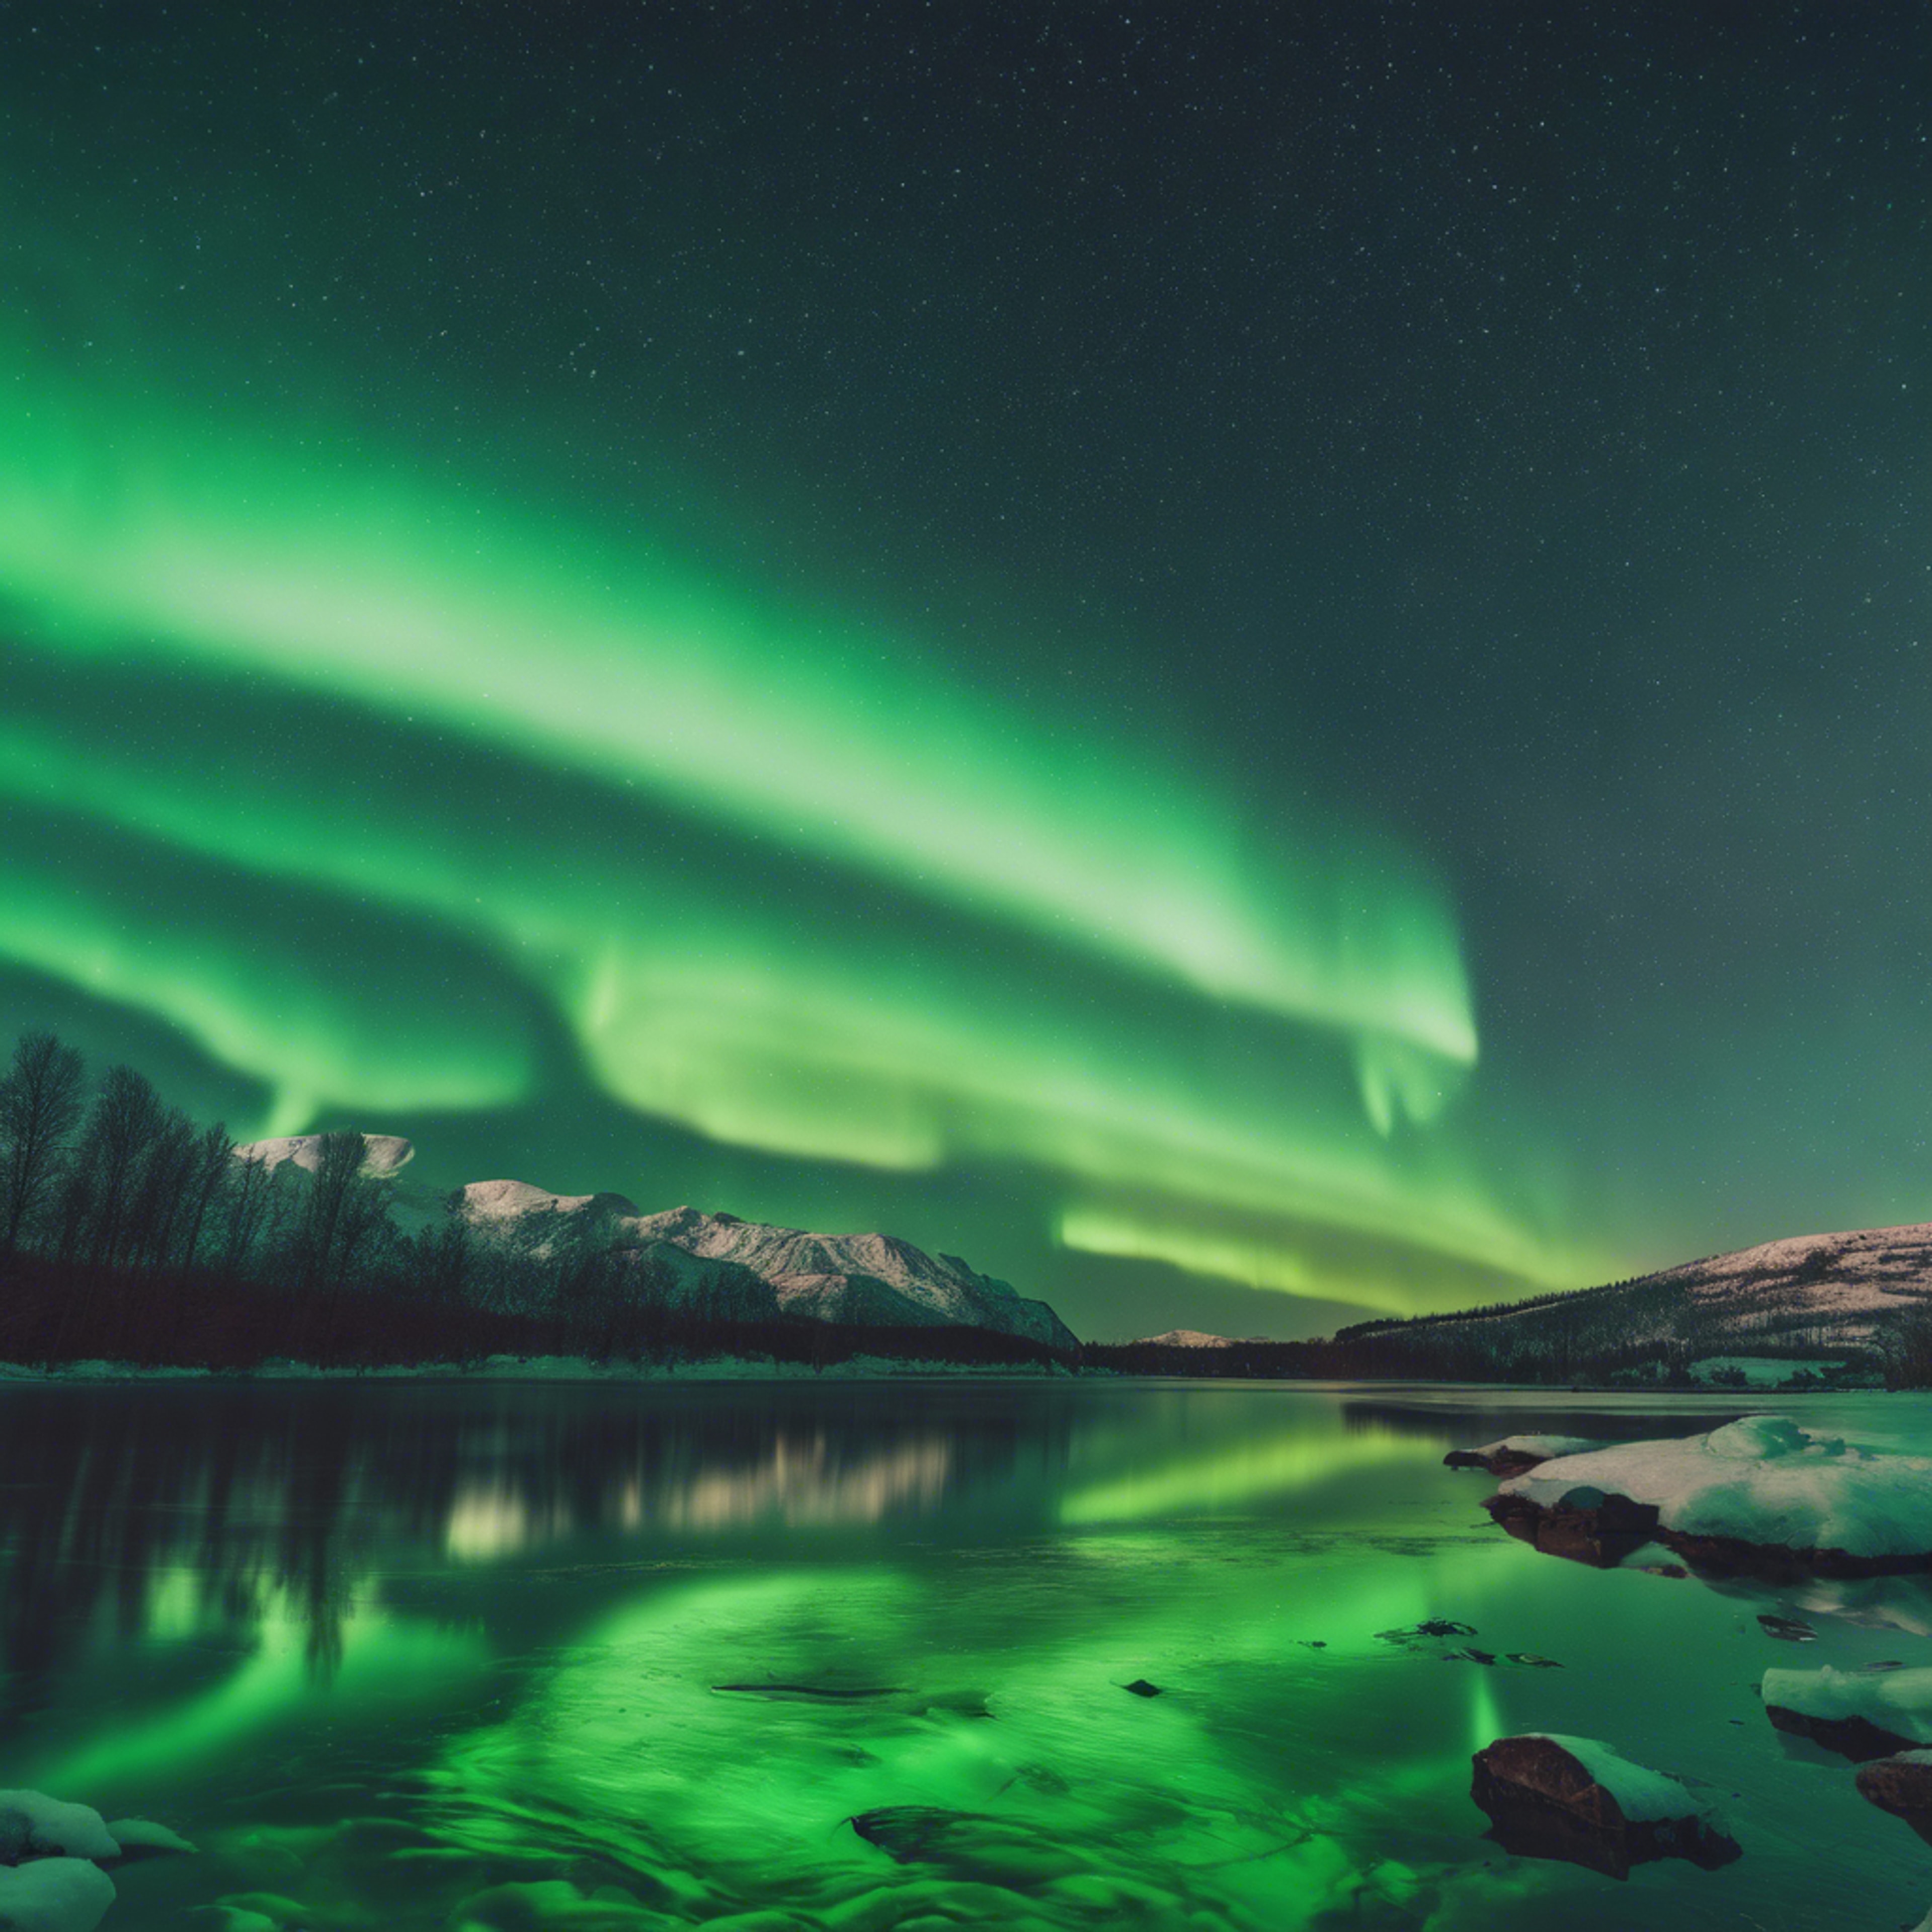 Cool green aurora borealis in the night sky. Обои[6739bc2aef4a46929ef0]